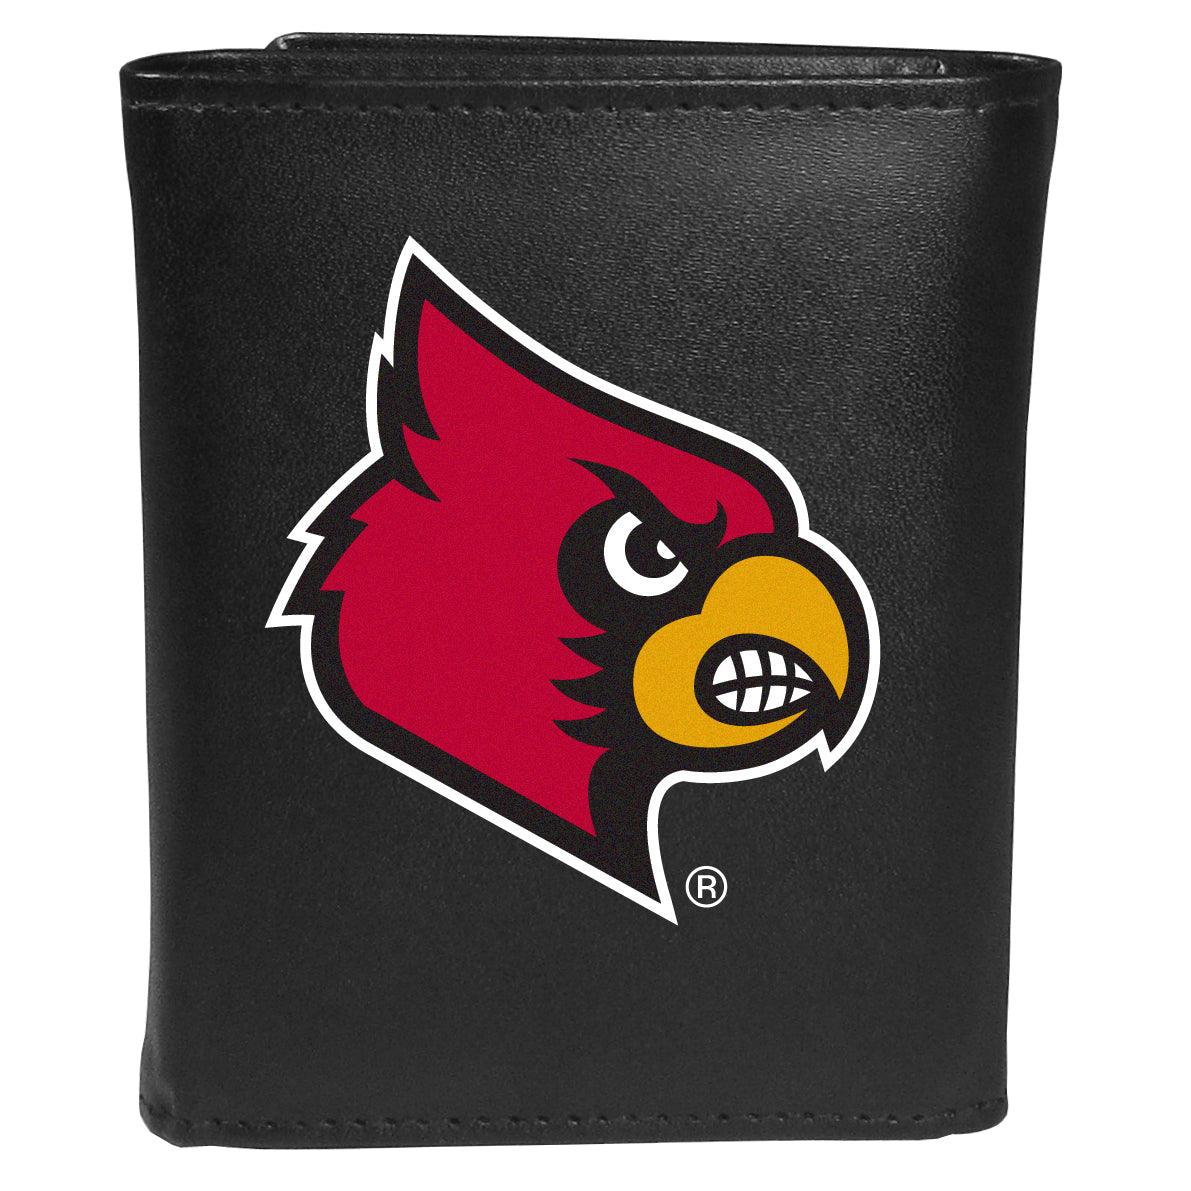 Men's Louisville Cardinals Big Logo Moccasin Slippers